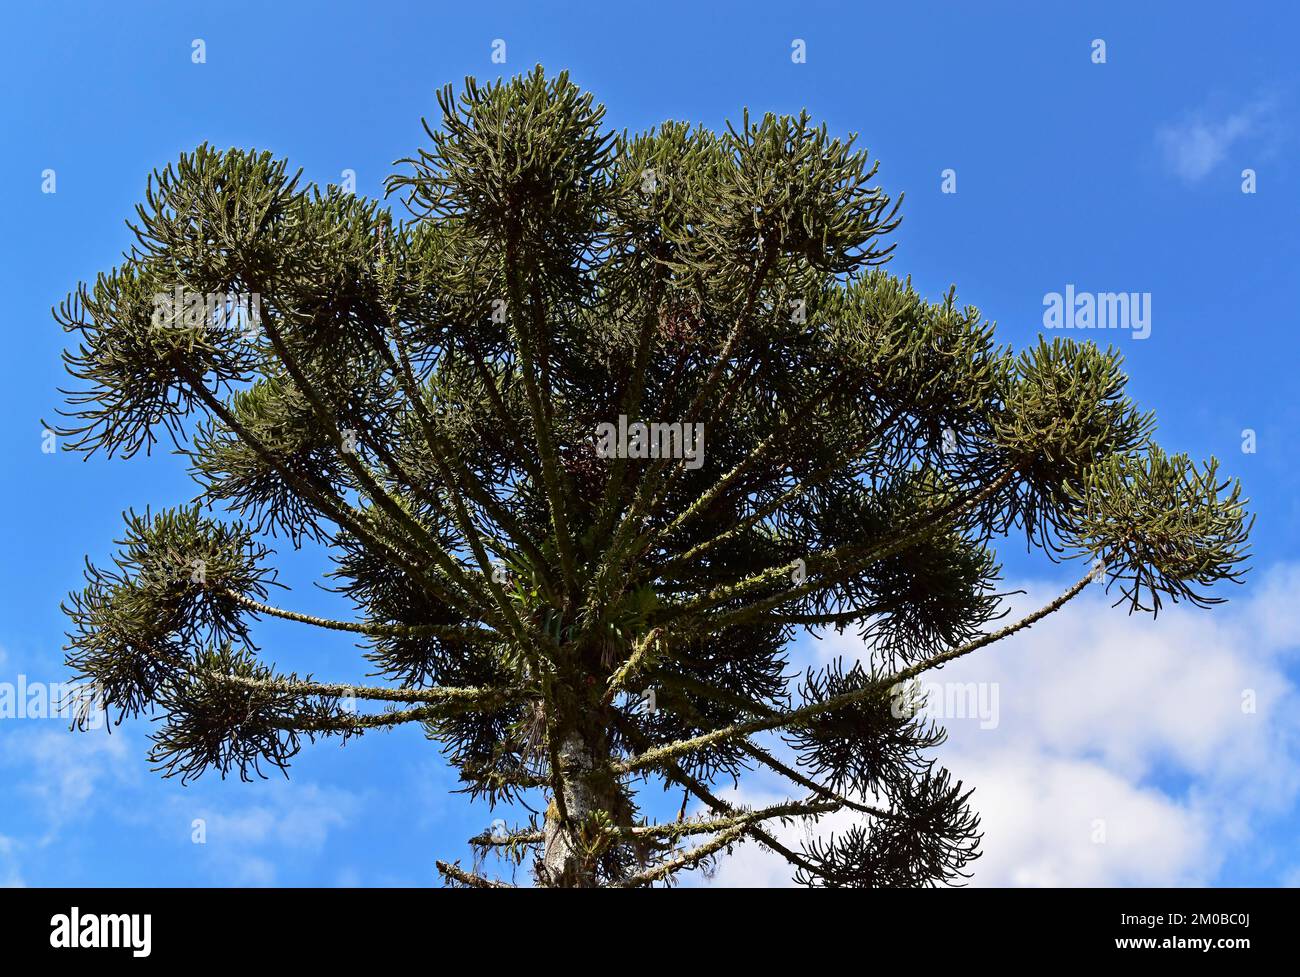 Candelabra tree or Brazilian pine (Araucaria angustifolia) and blue sky Stock Photo